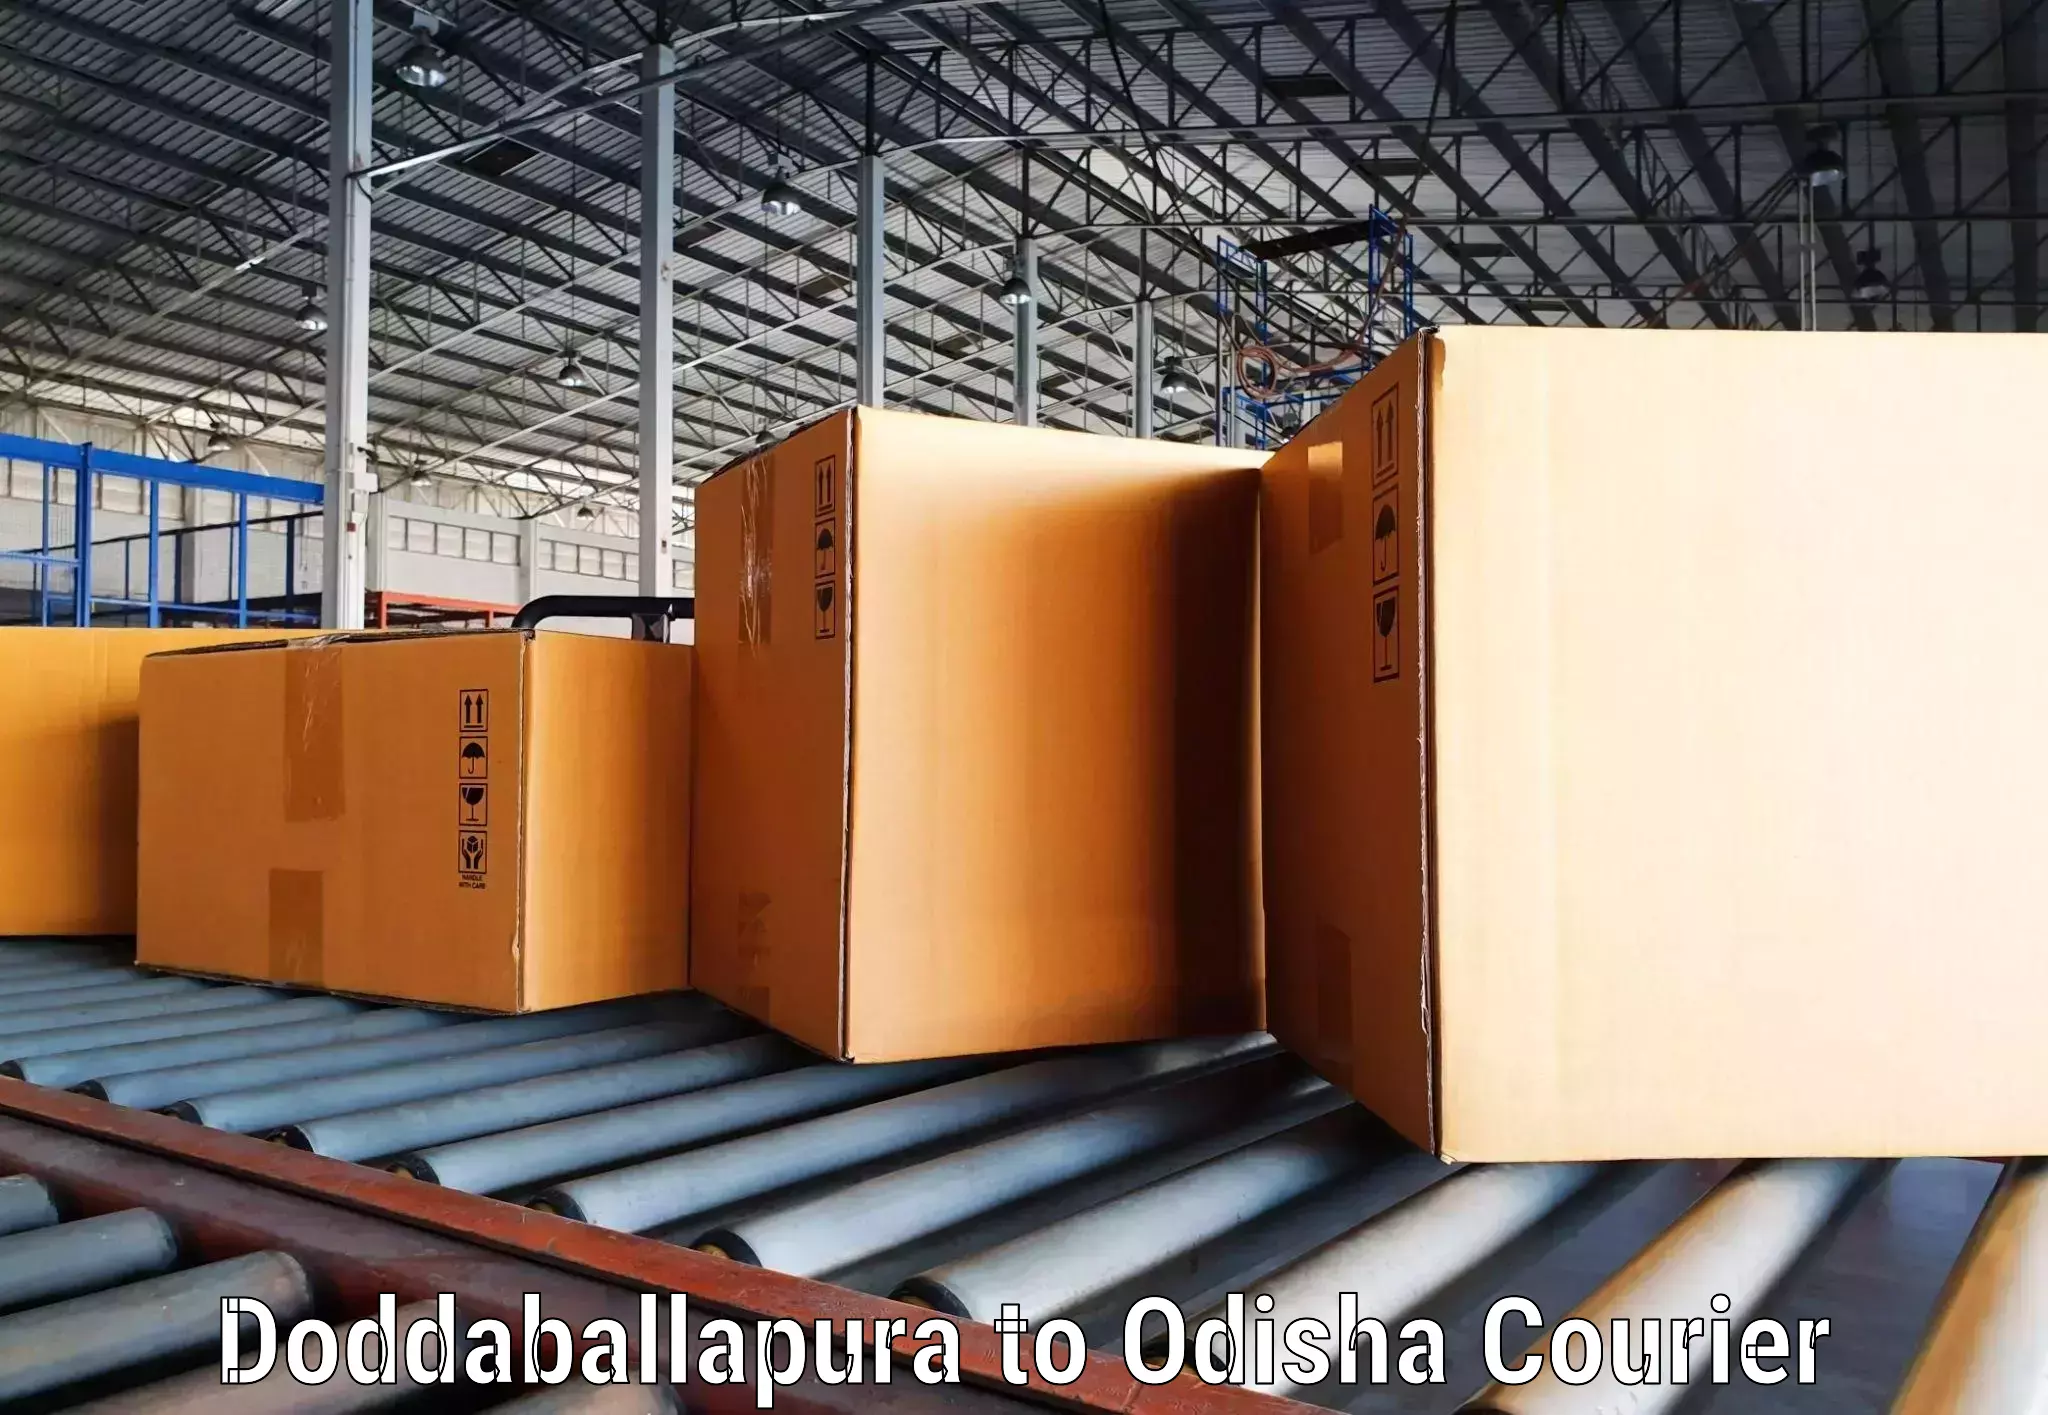 Courier service innovation Doddaballapura to Talcher